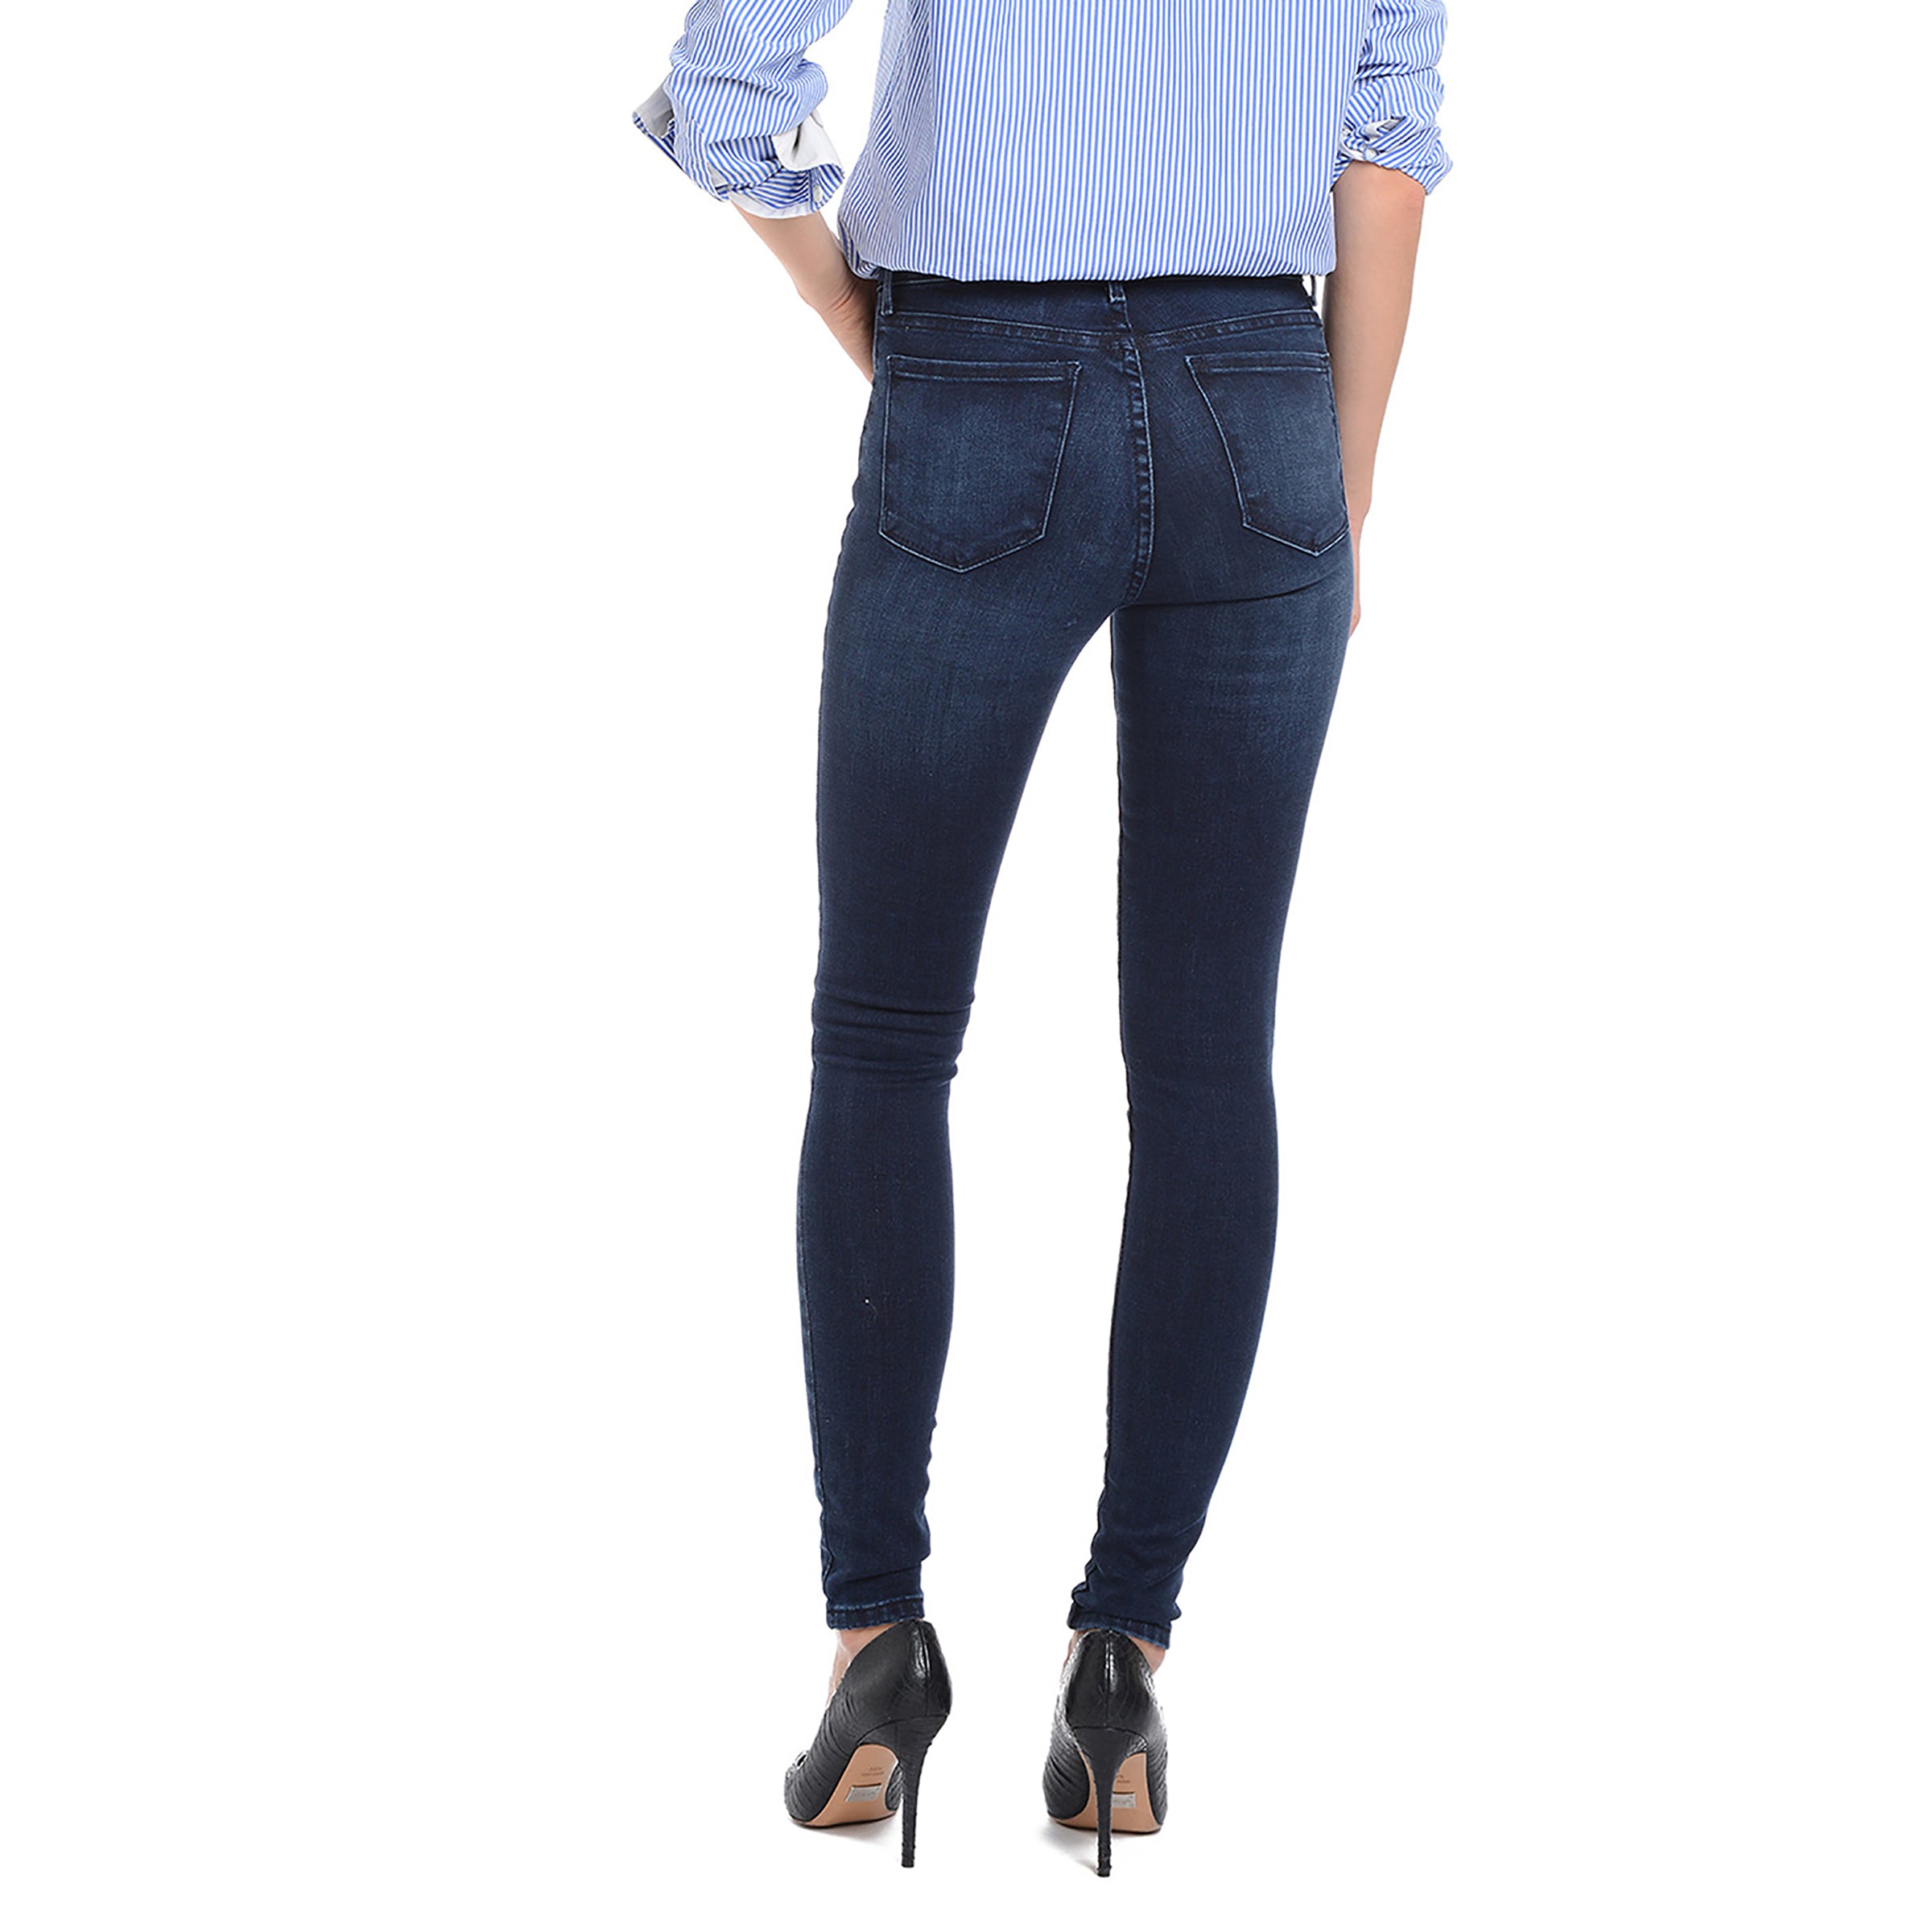 Women wearing Azul oscuro/medio High Rise Skinny Moore Jeans